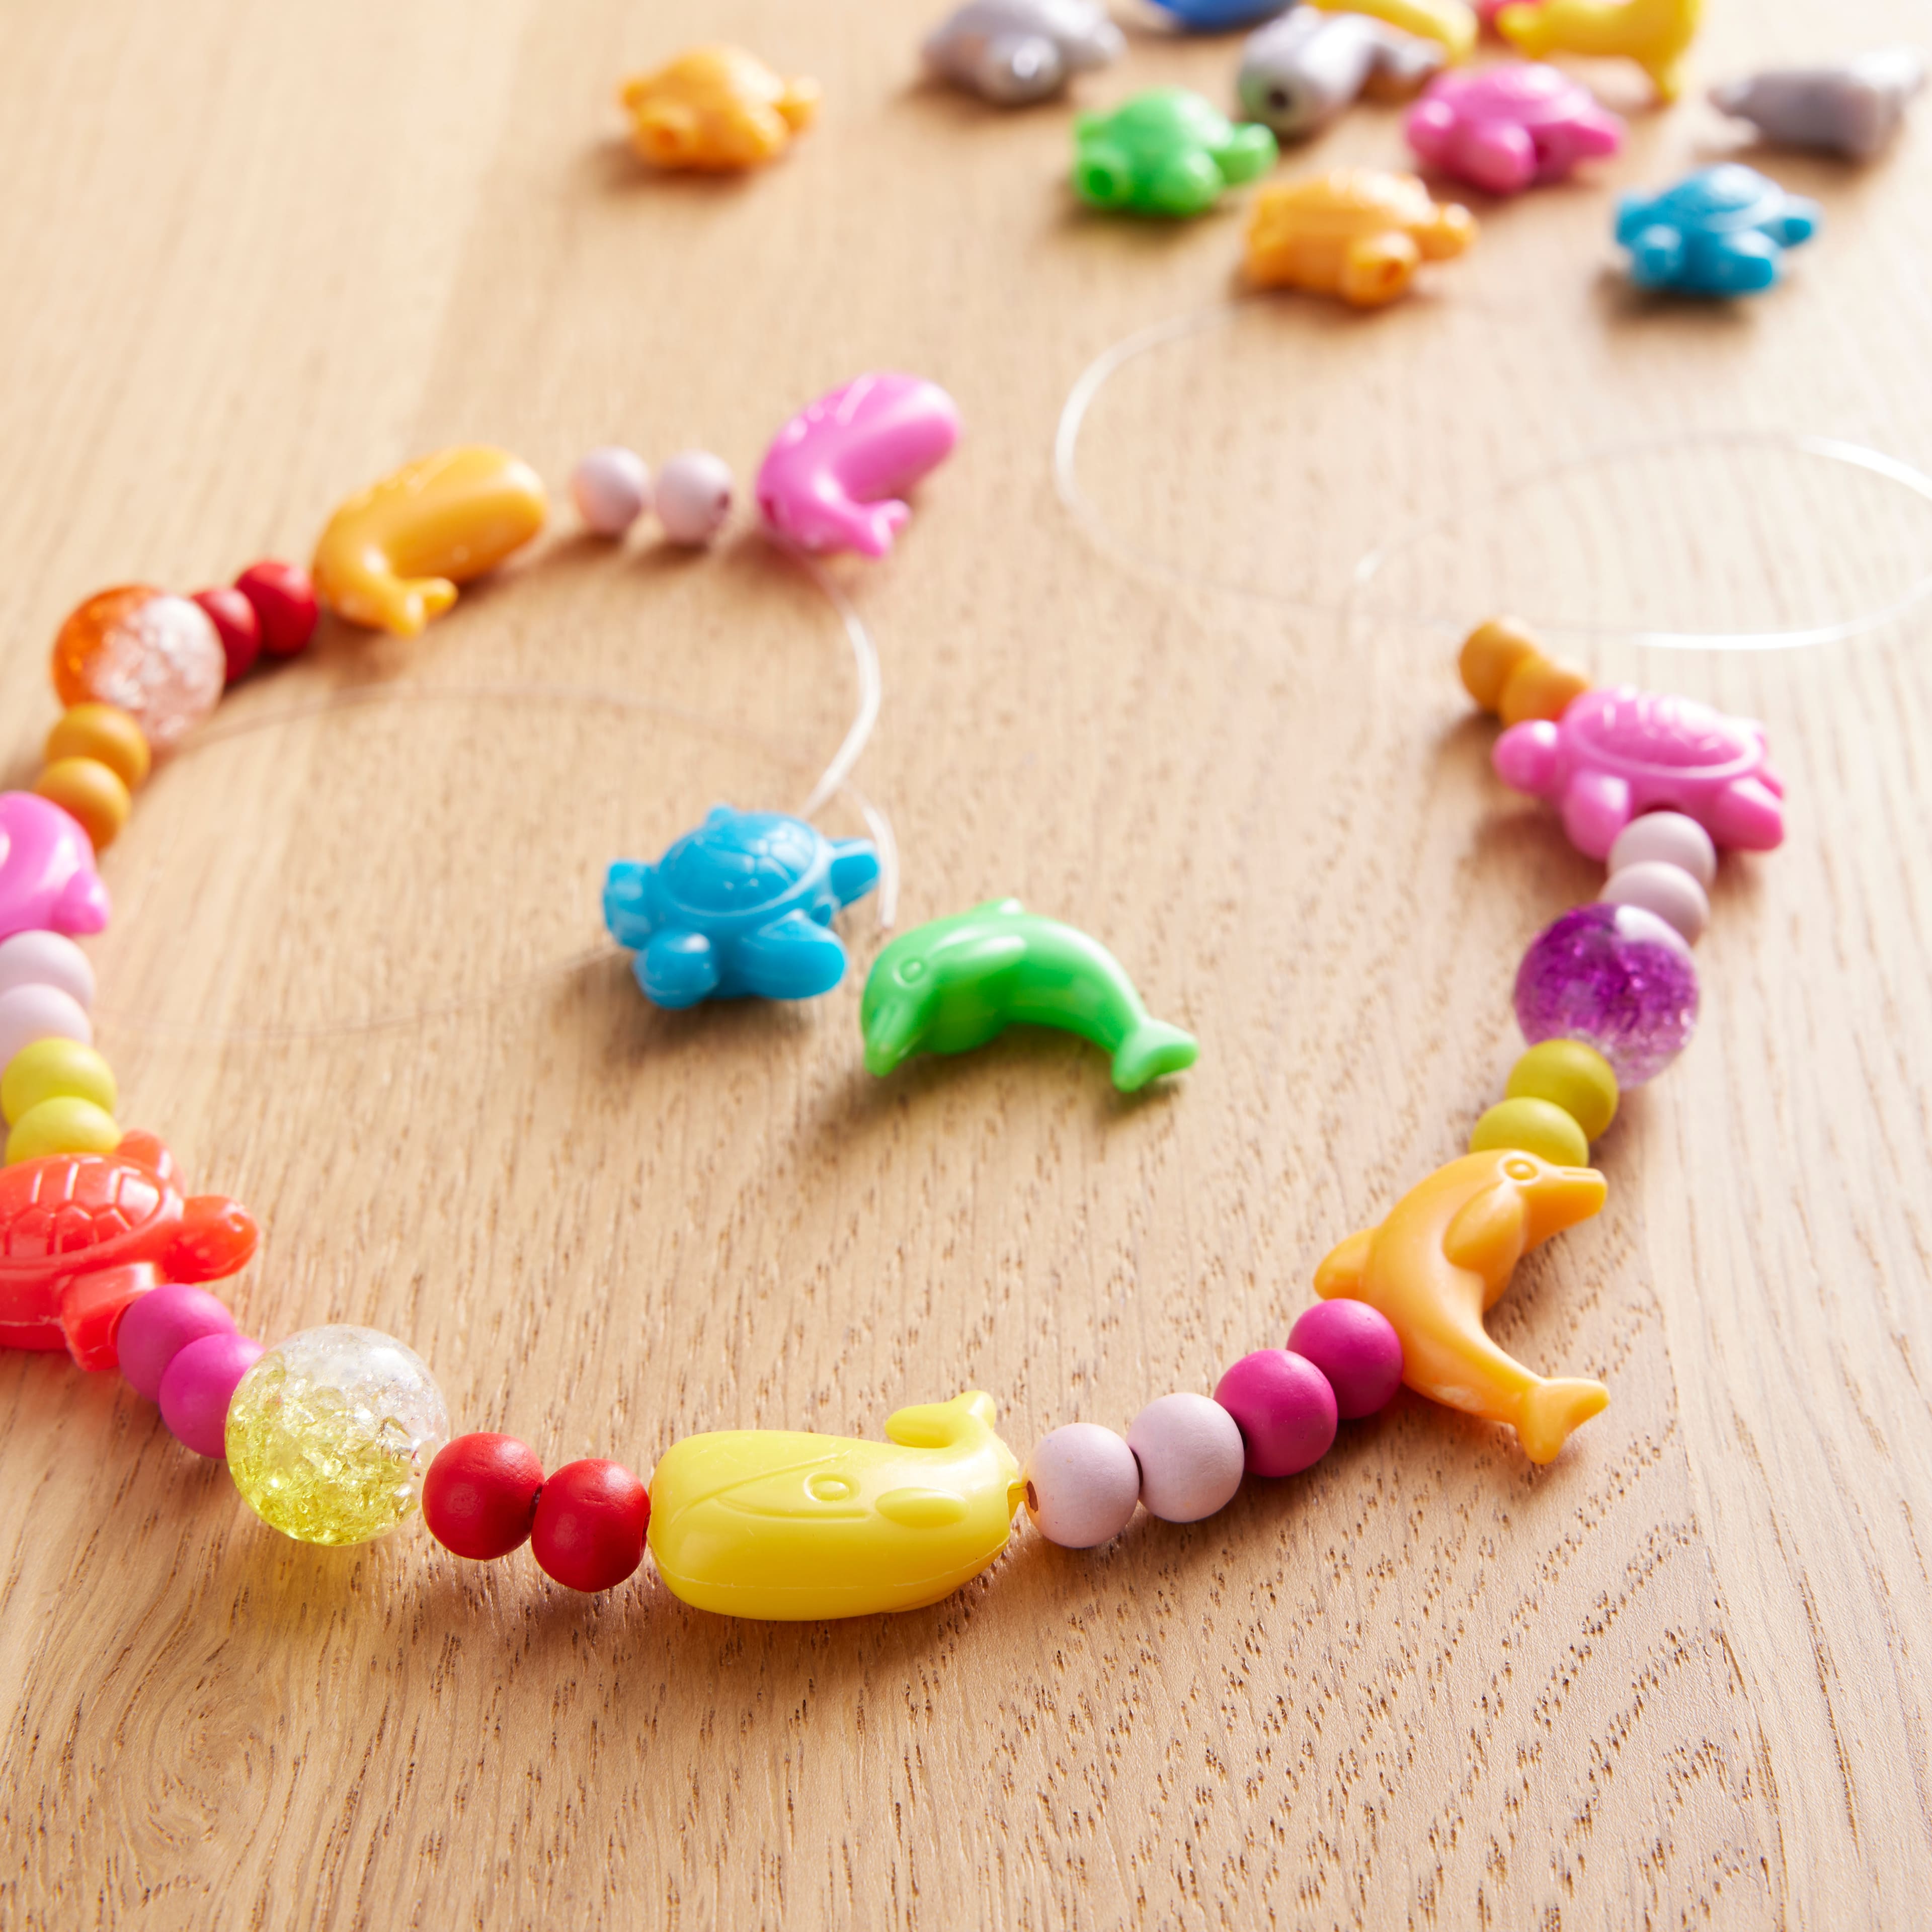 Creatology Pop Beads Perles Pop Multicolored Multishaped Beads.